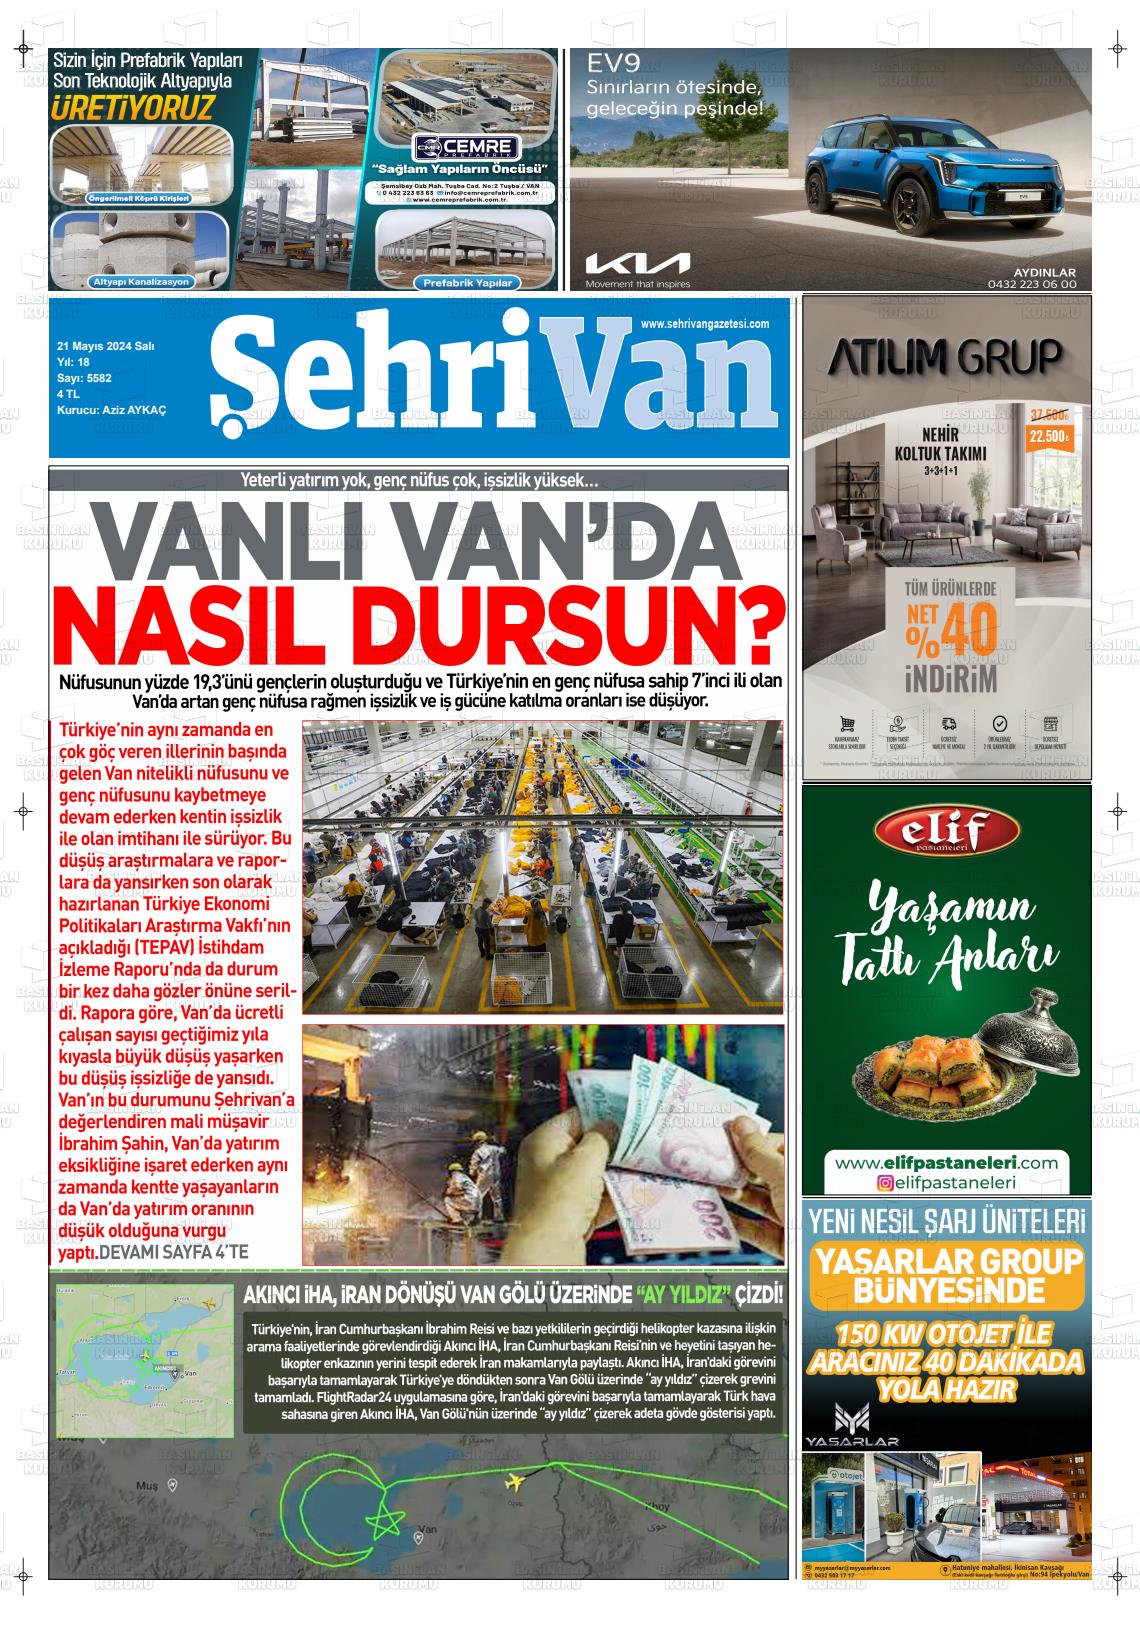 ŞEHRİVAN Gazetesi